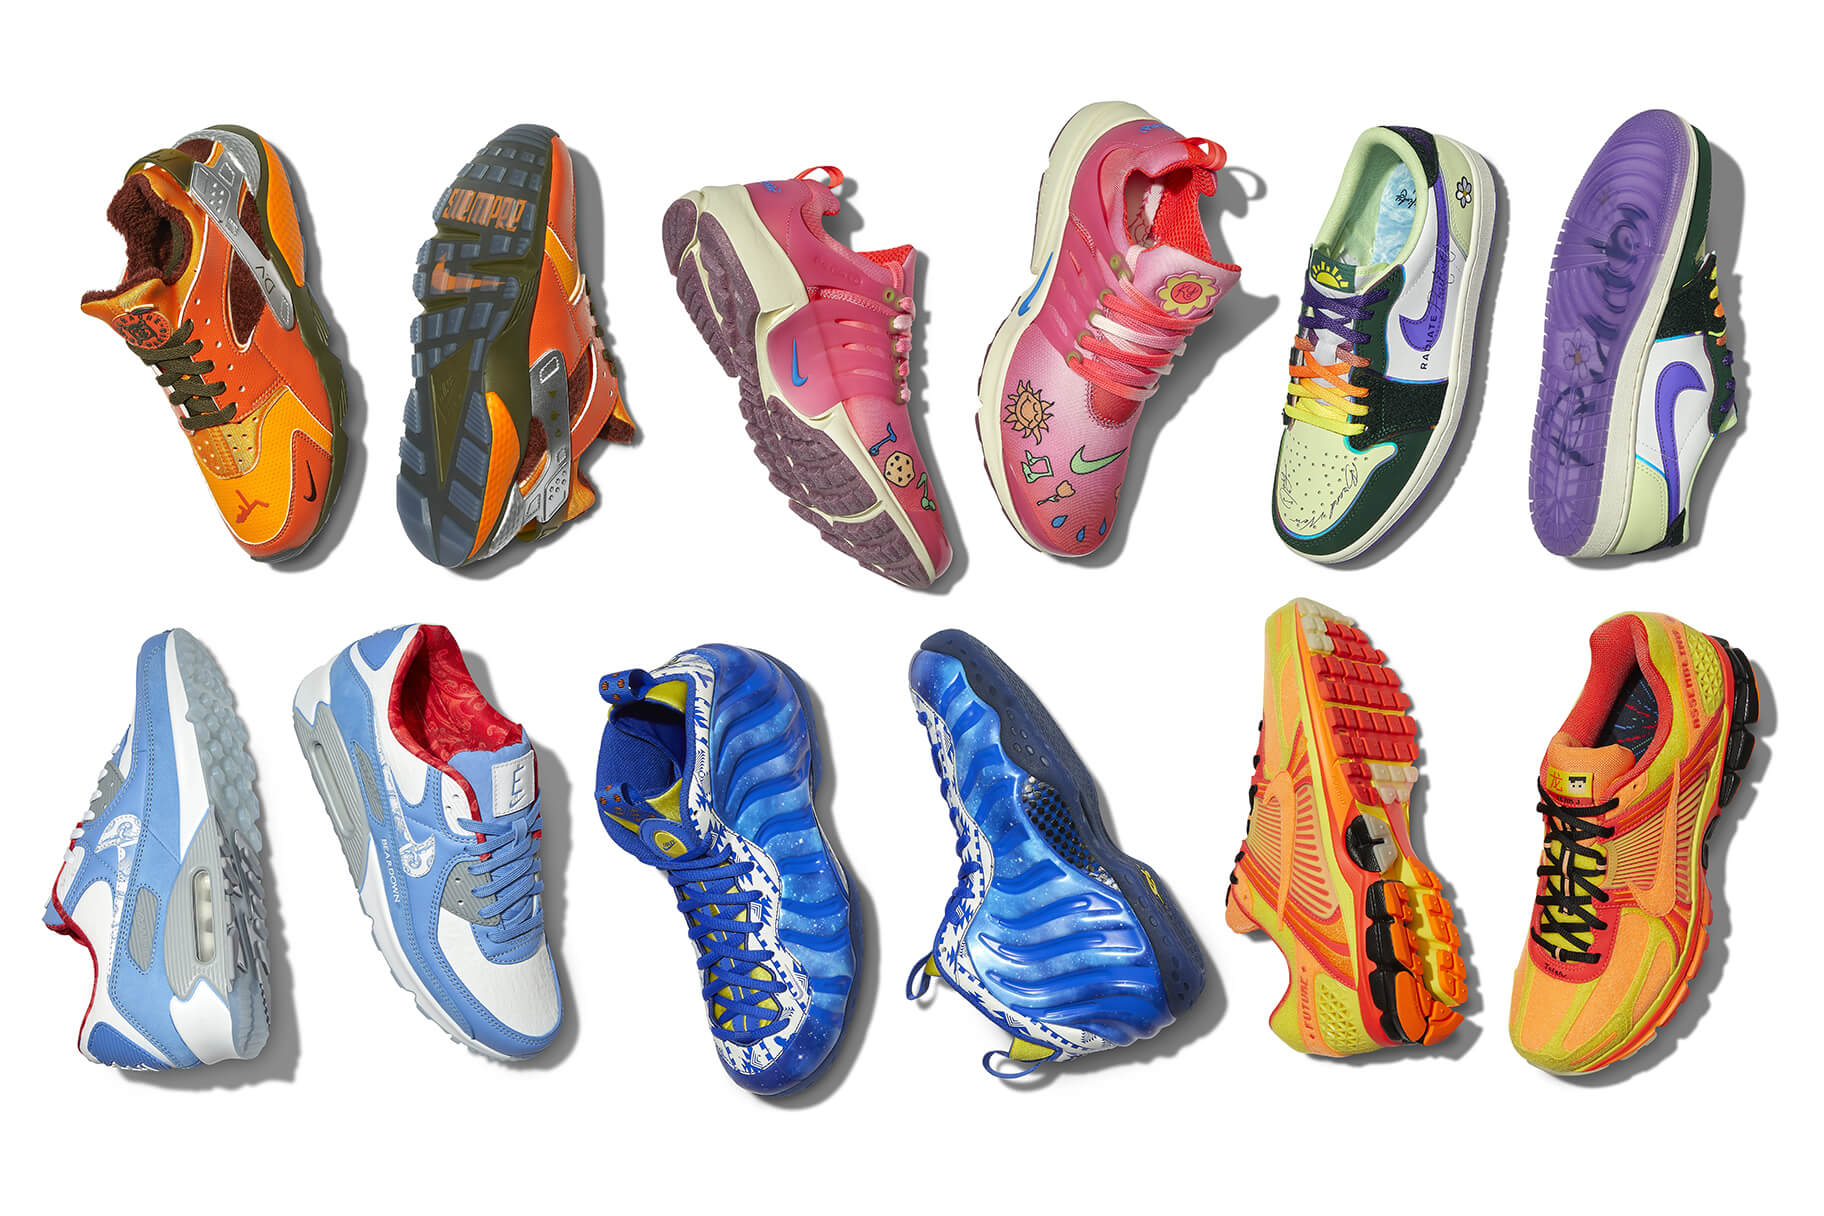 Nike i OHSU Doernbecher Children’s Hospital presenten la col·lecció Doernbecher Freestyle XVIII